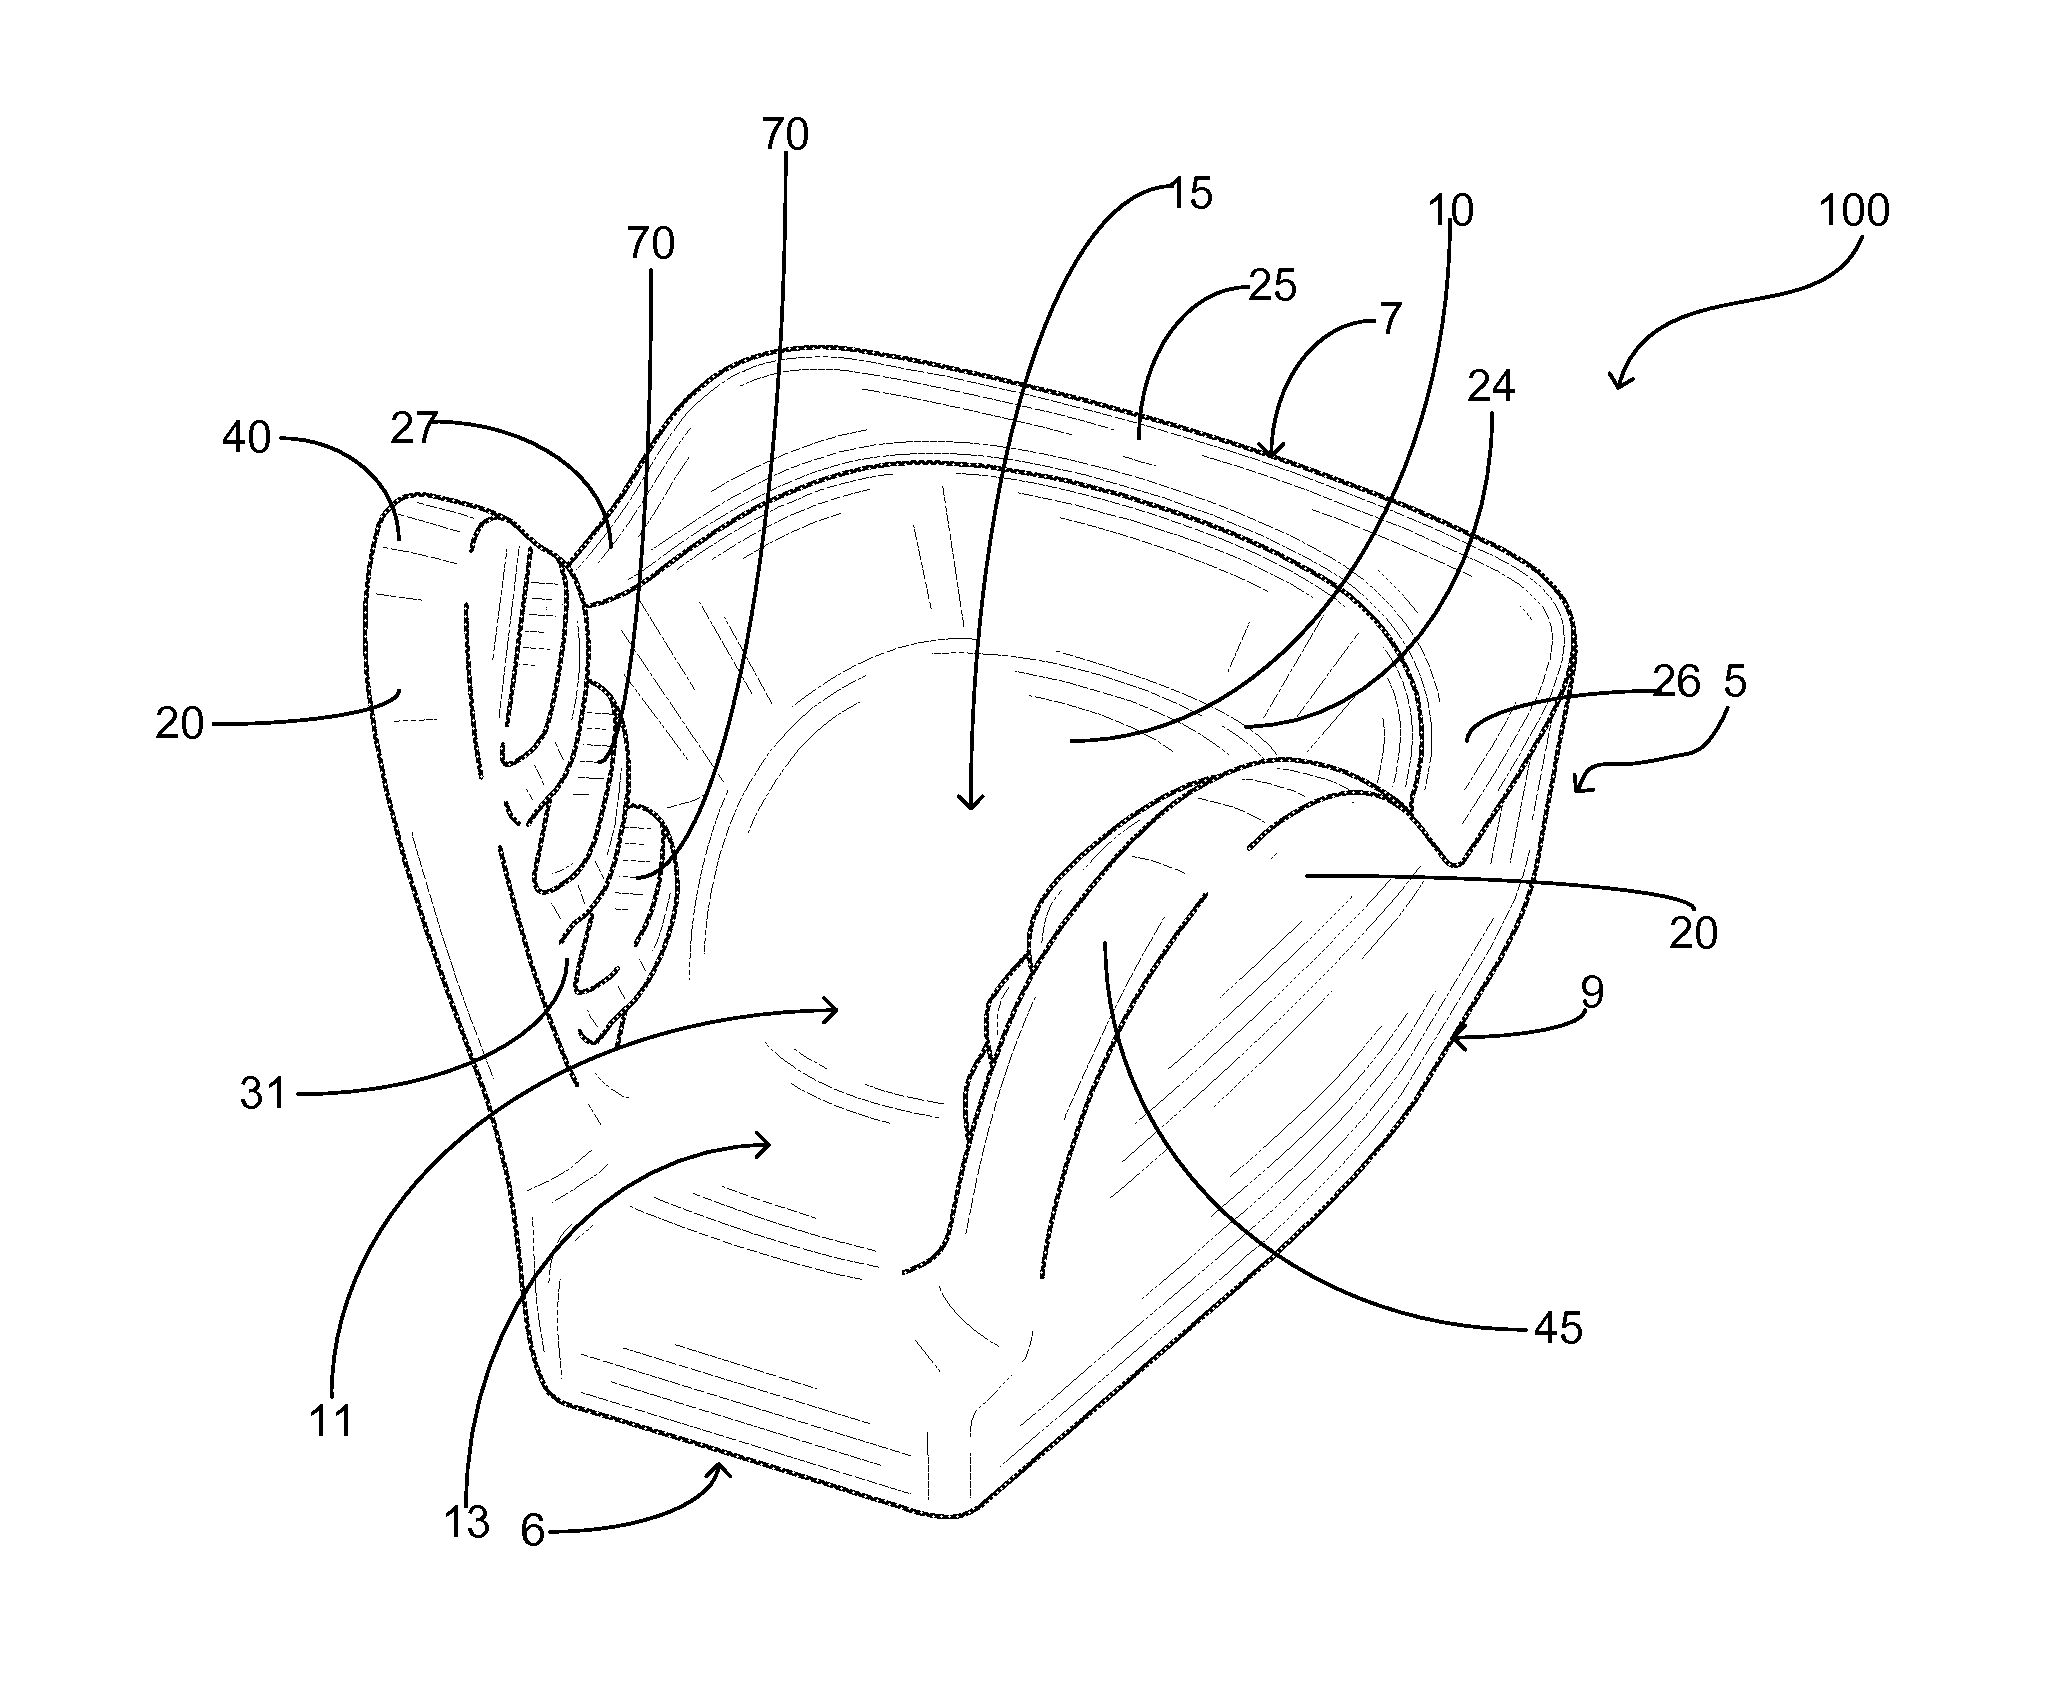 Supine headrest with mandibular engaging portion